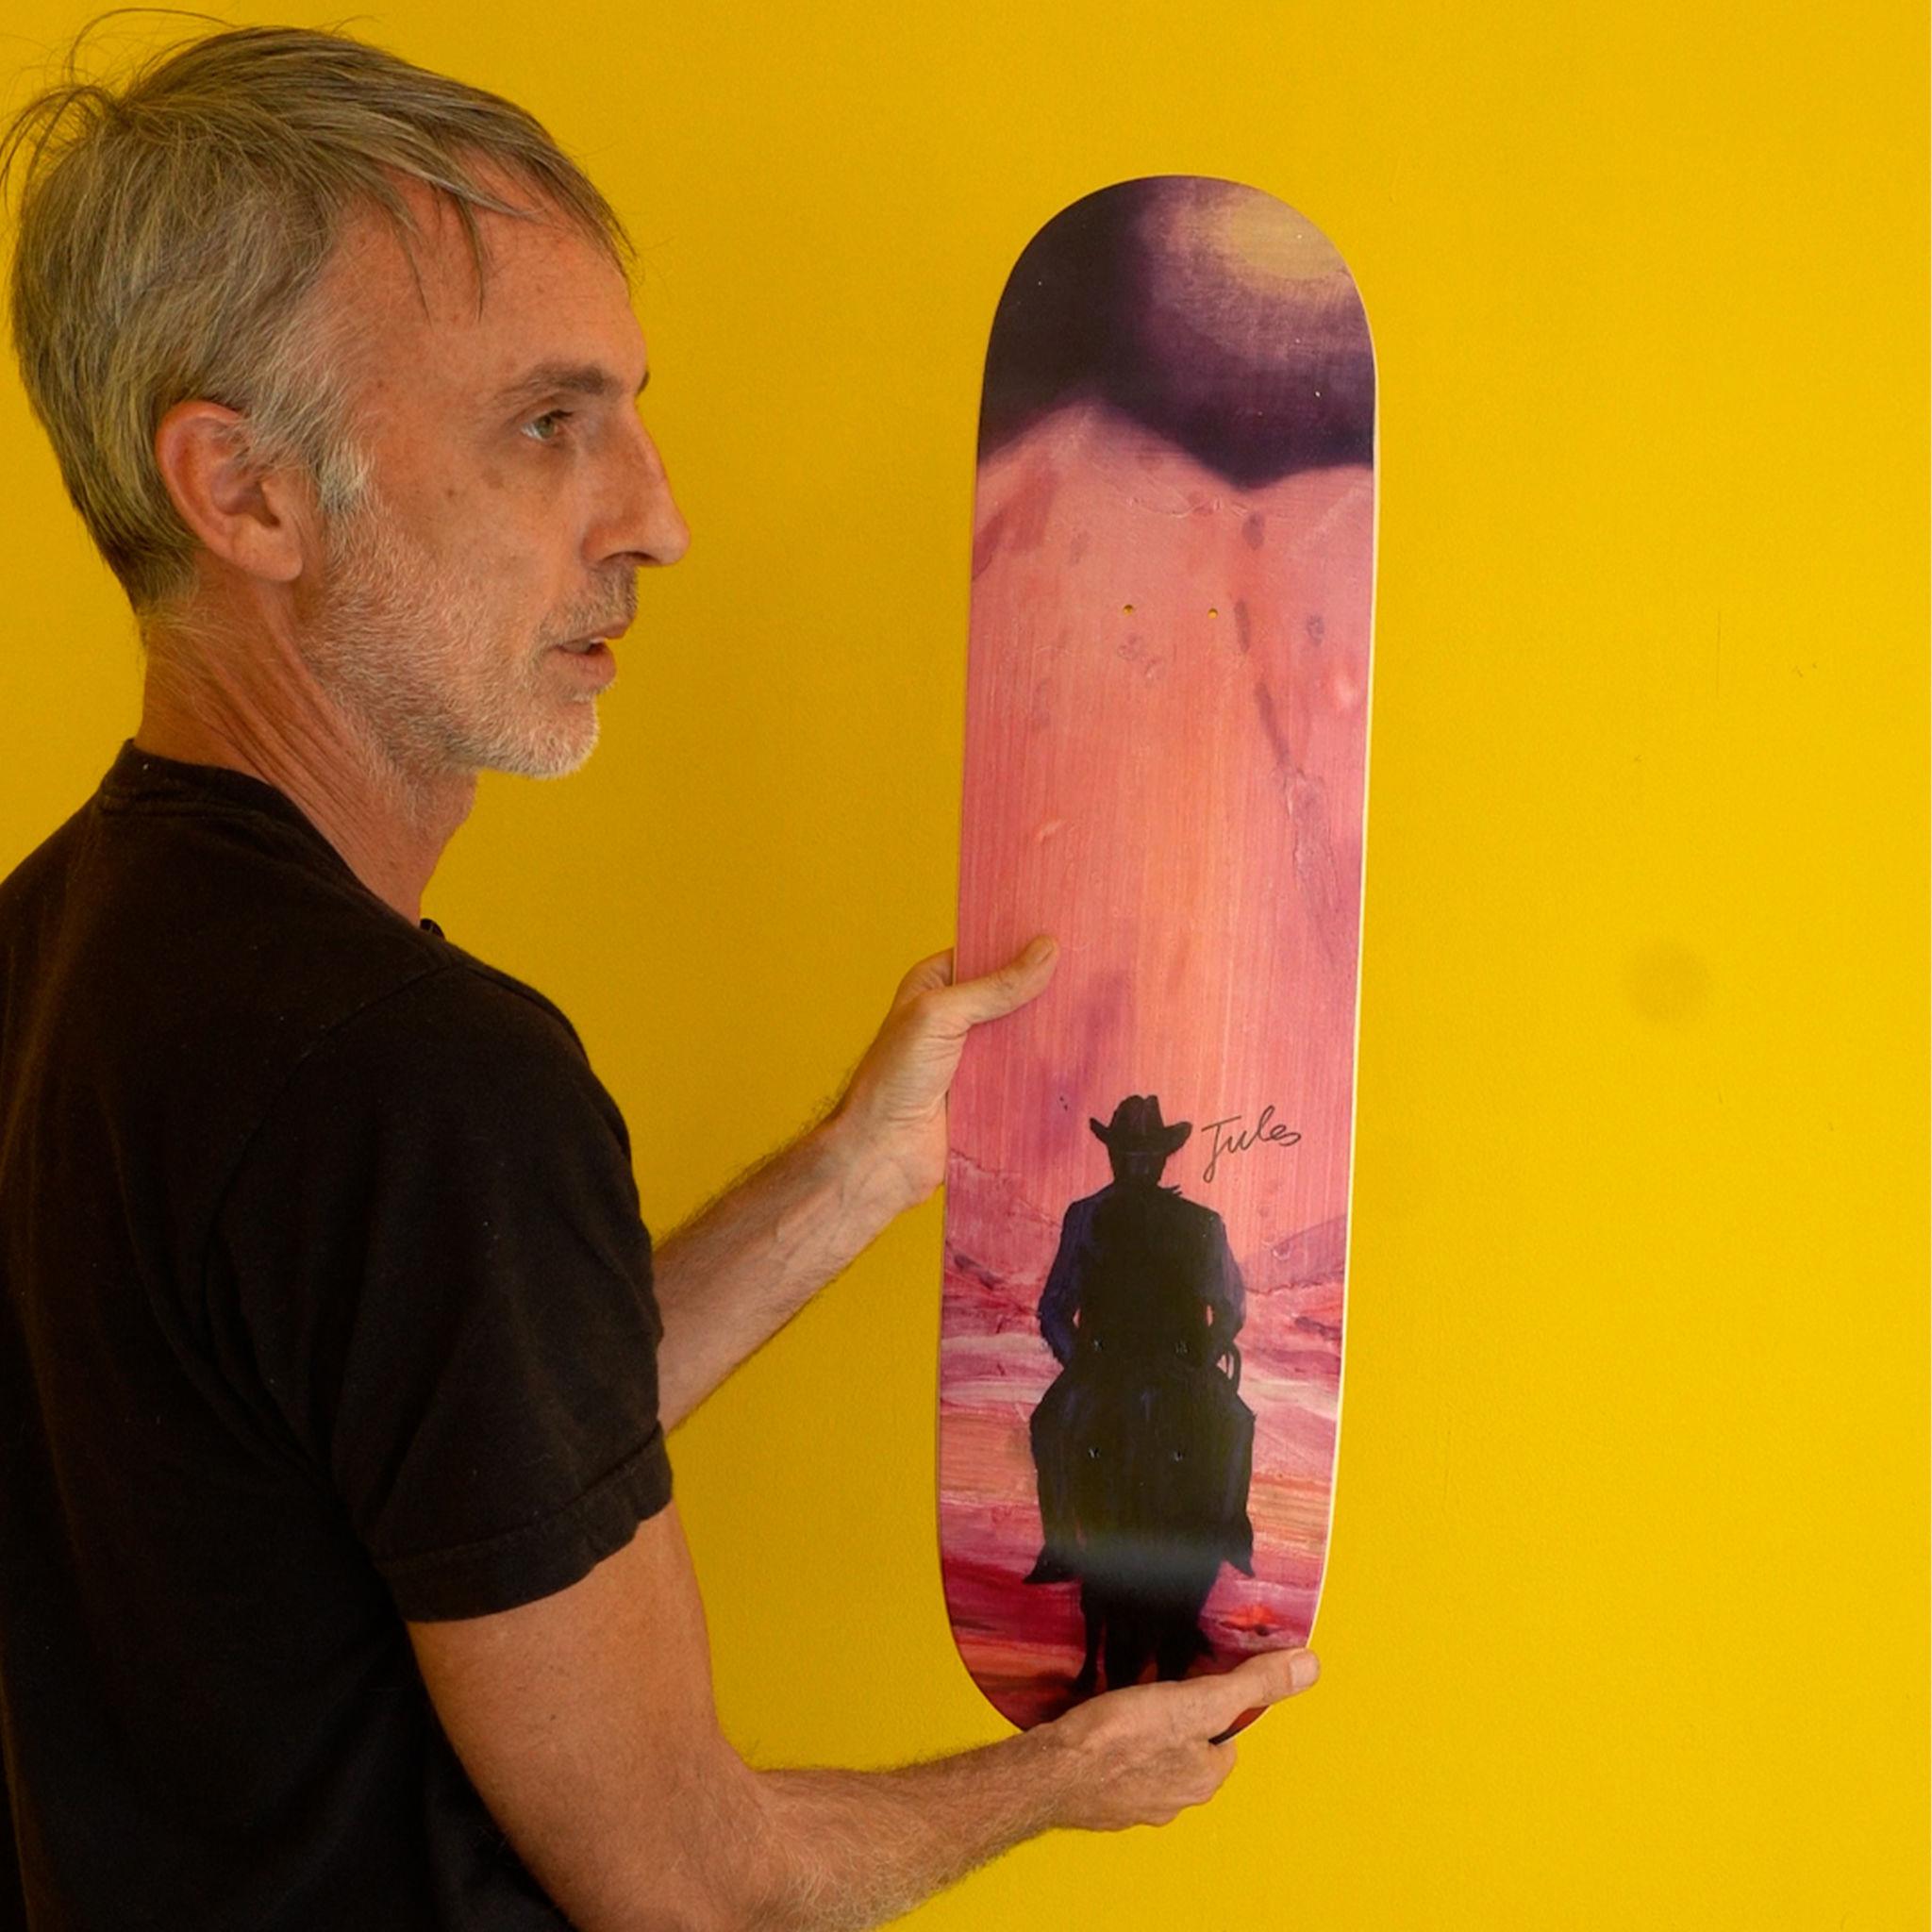 pink floyd skate deck